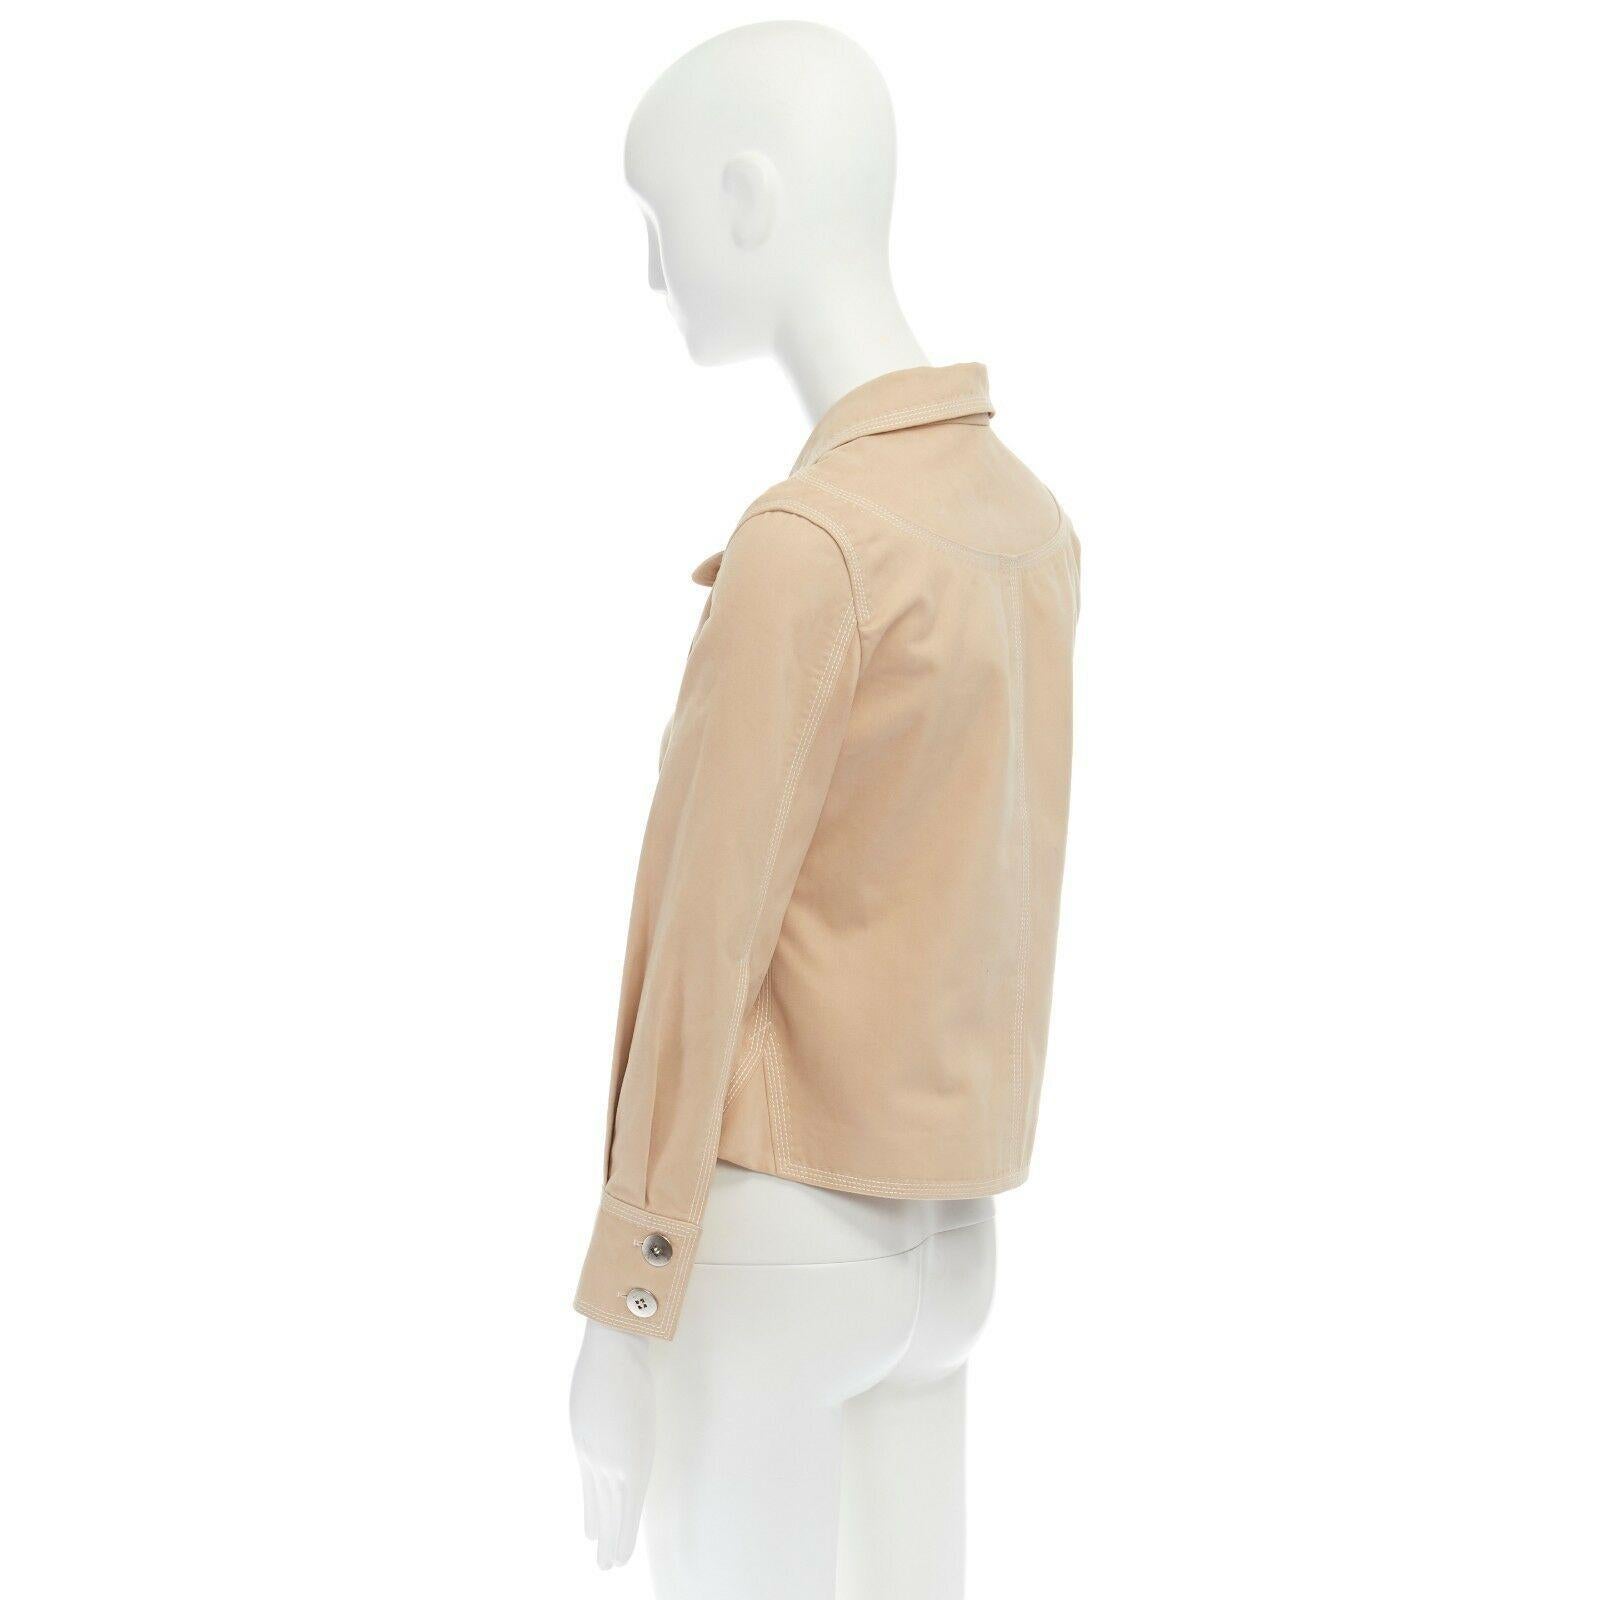 Women's LOUIS VUITTON beige cotton white overstitched pocket detail shirt jacket FR36 S